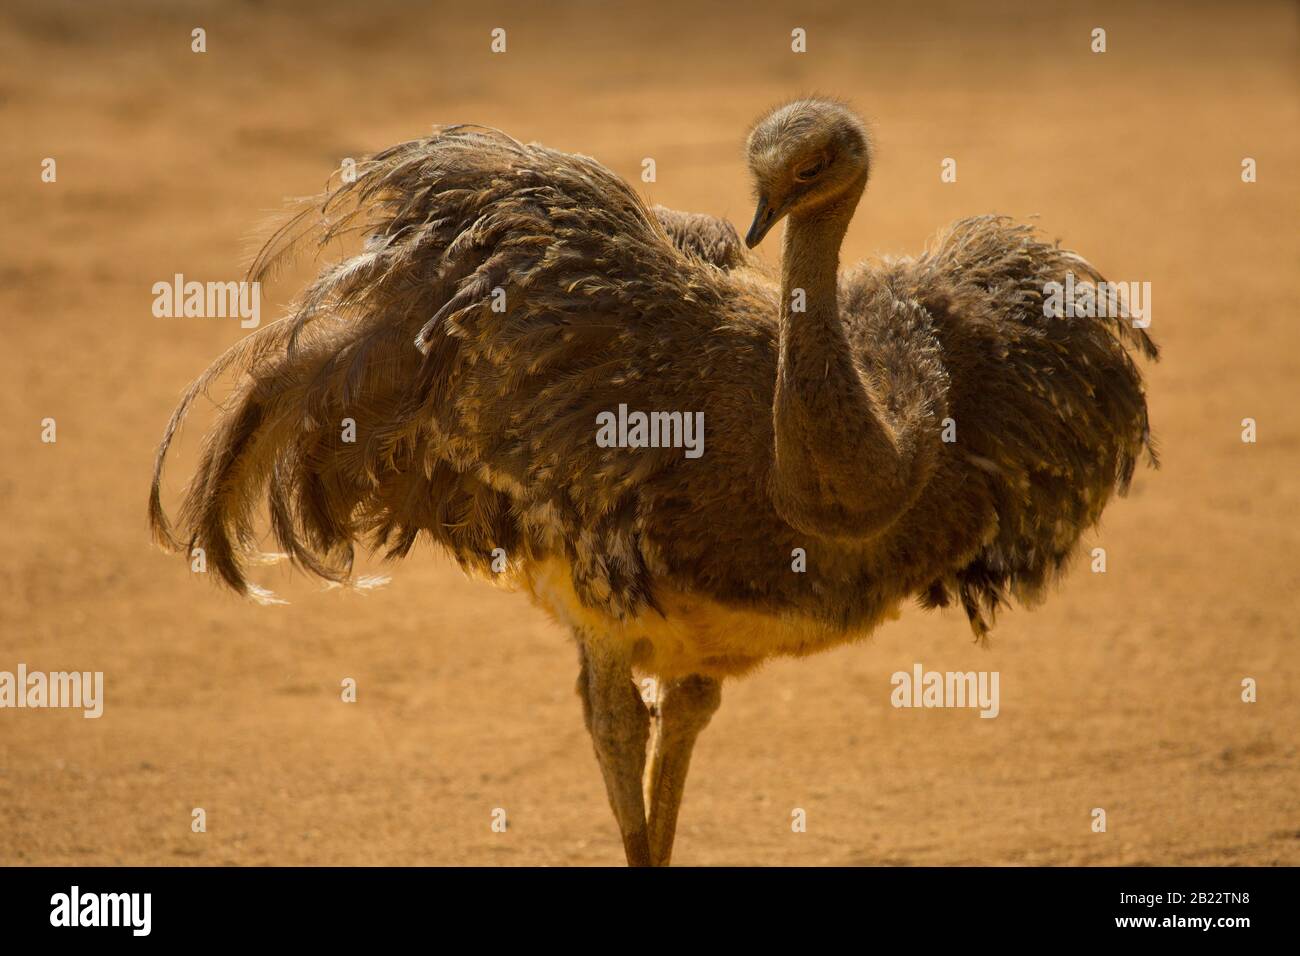 A Darwin's Rhea posing in the sunshine in an arid, desert setting with wings spread Stock Photo